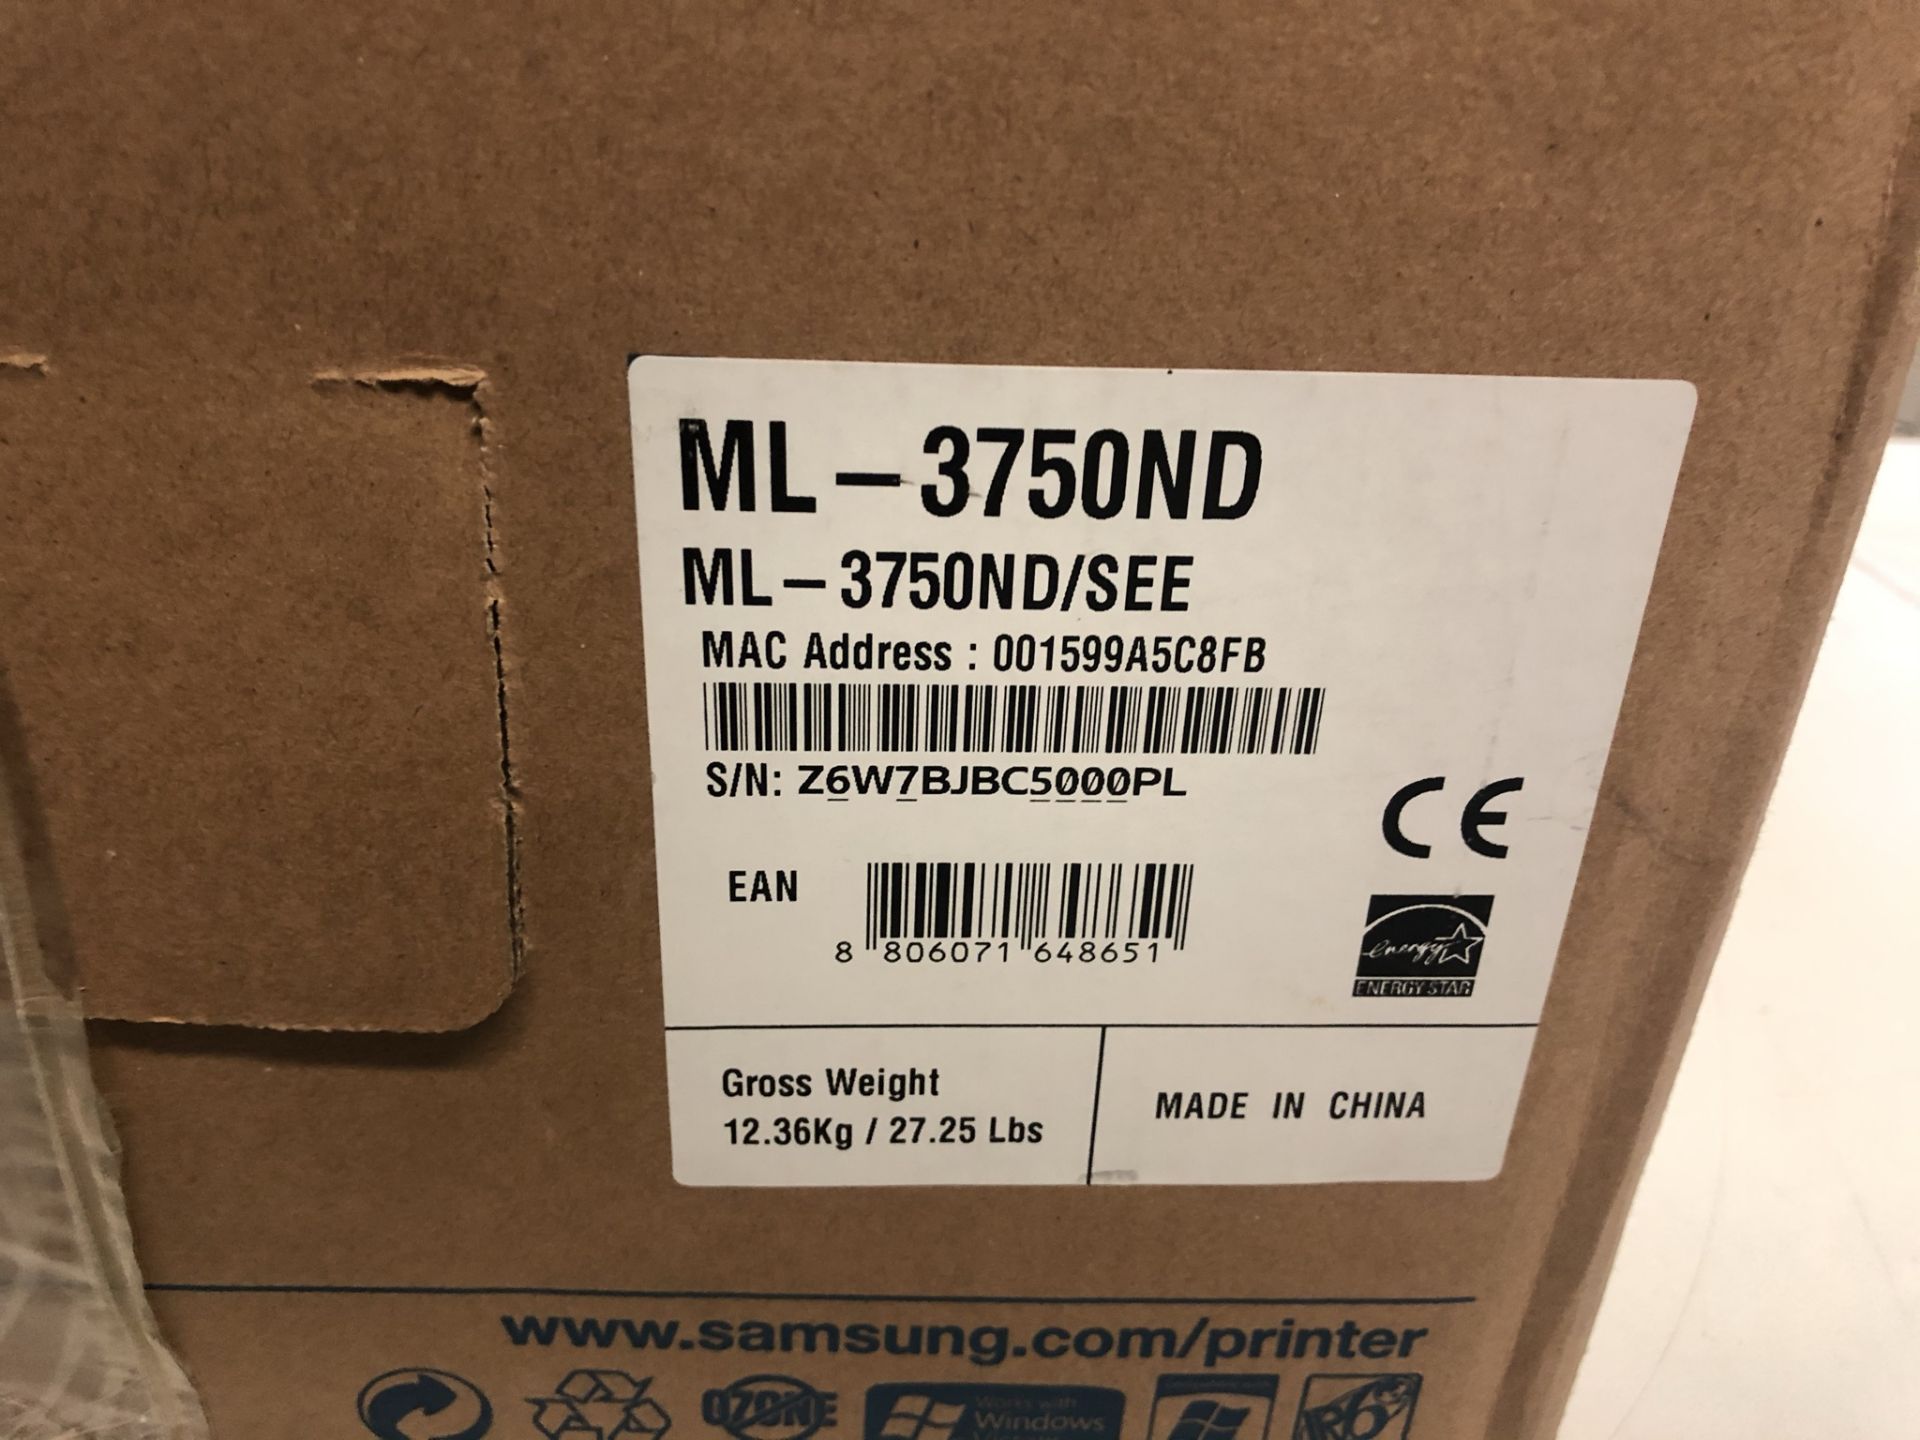 Samsung ML-3750ND Mono Laser Printer - Image 2 of 3